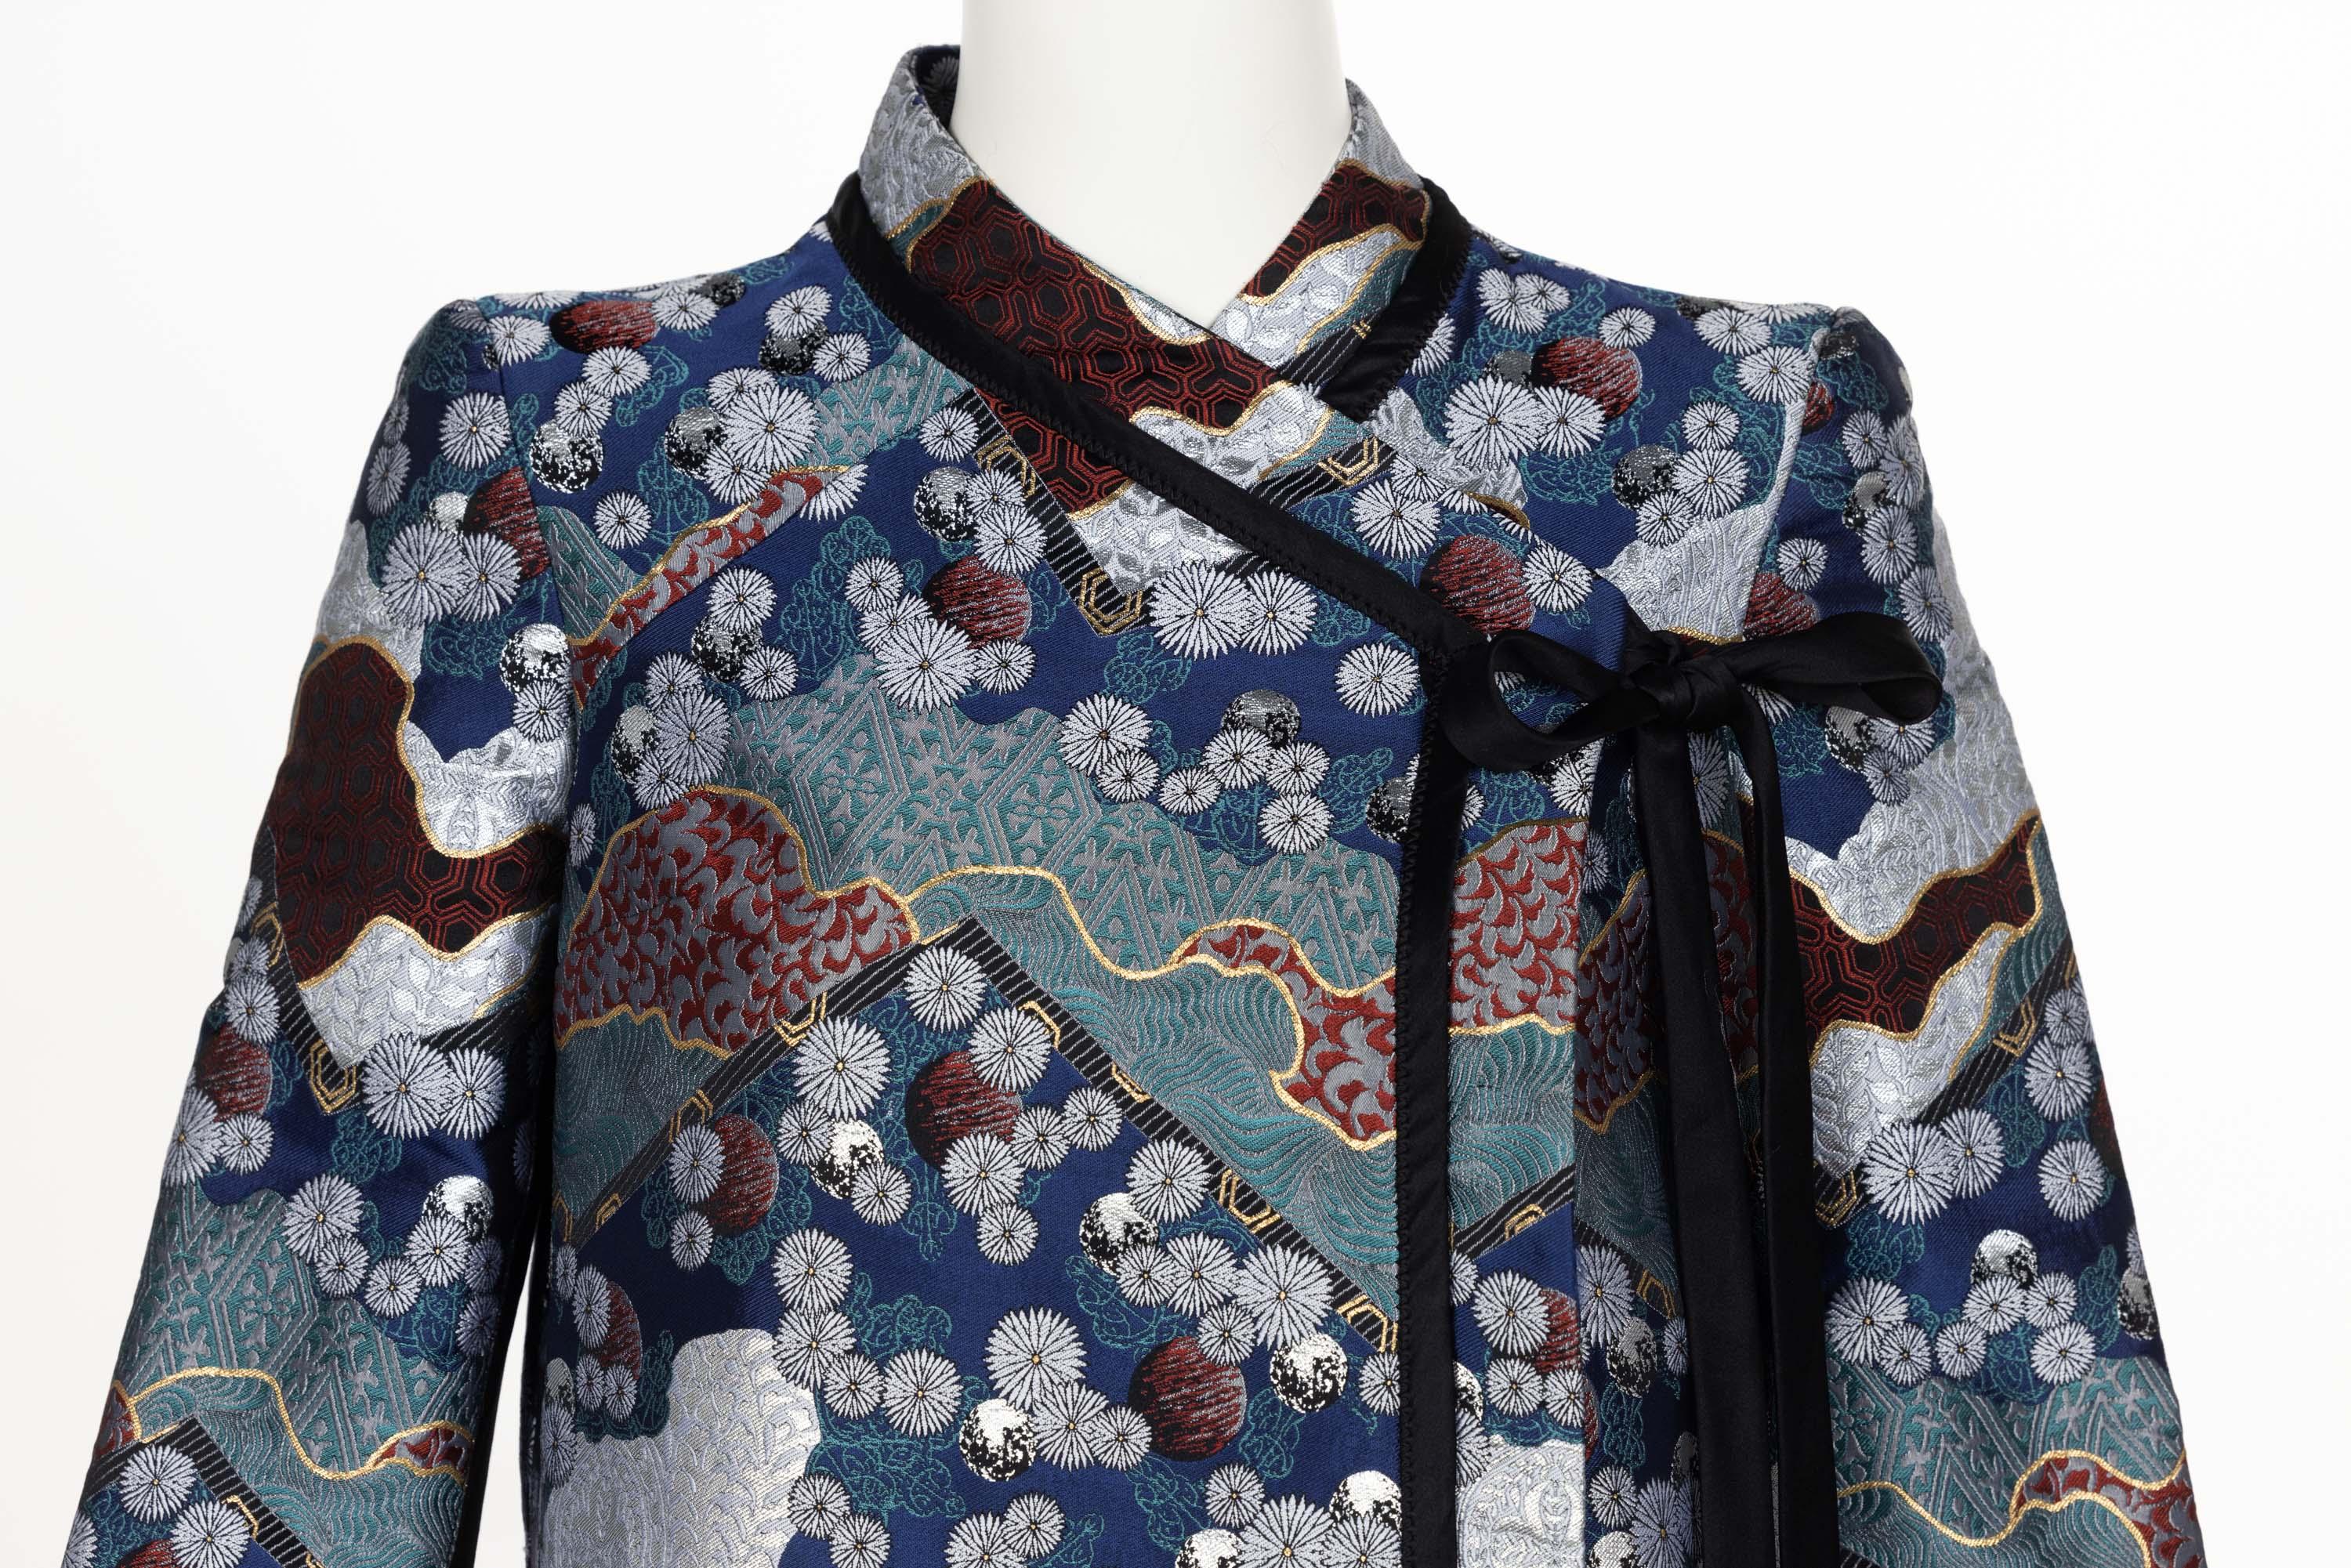 Proenza Schouler Fall 2012 Brocade Dress / Coat For Sale 2